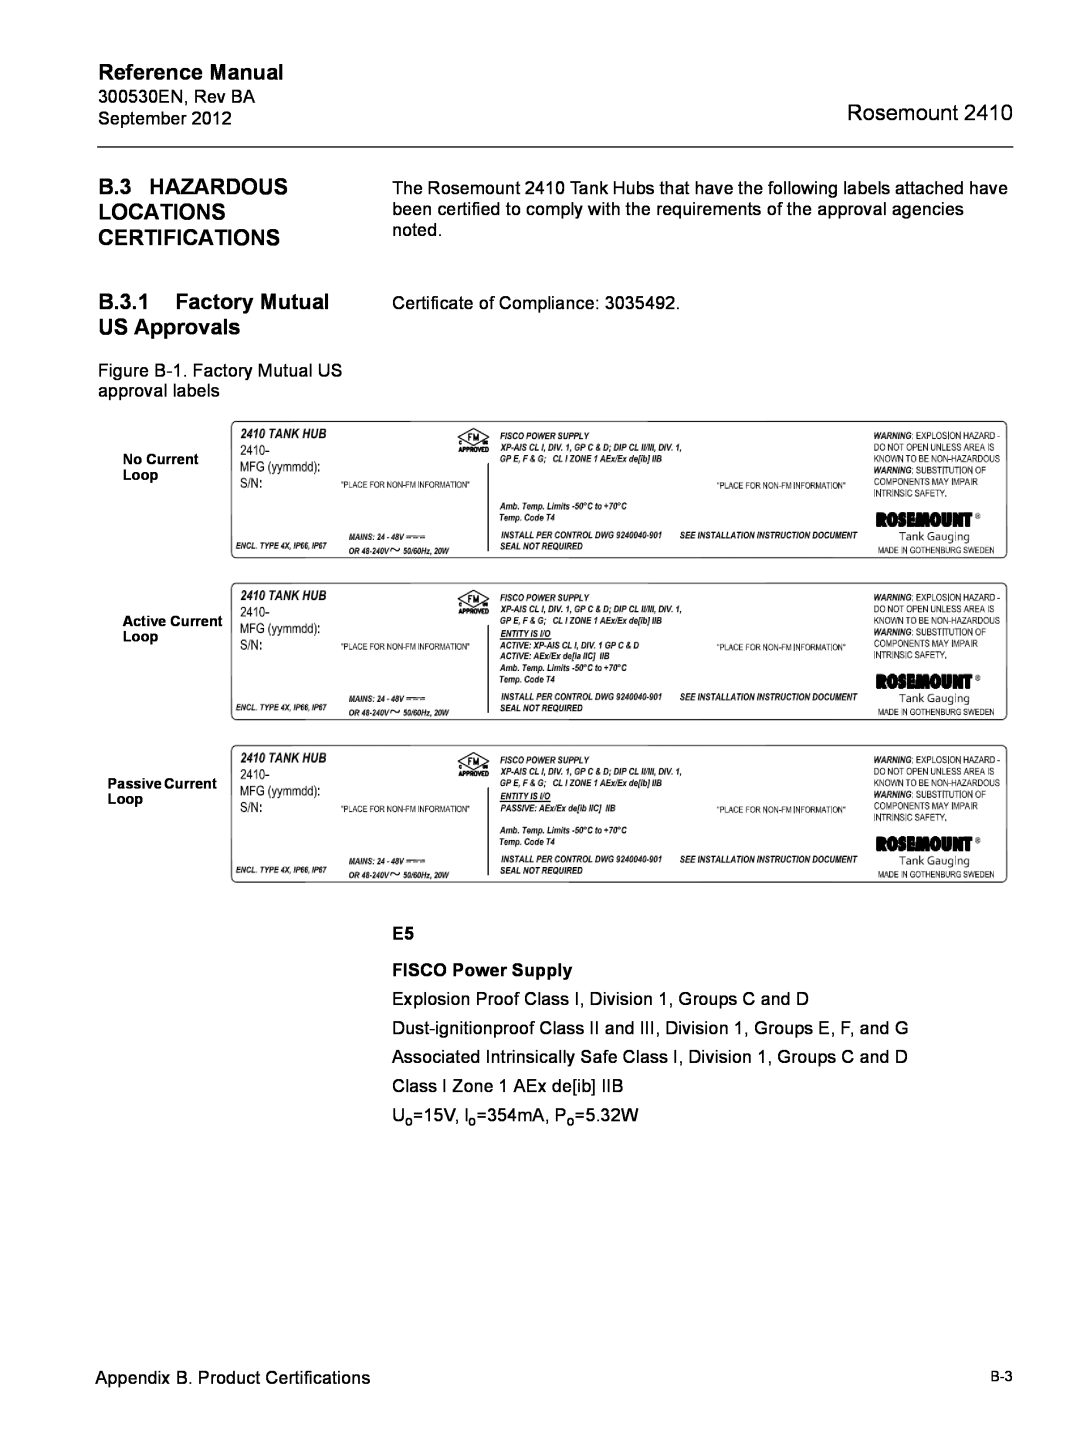 Emerson Process Management Rosemount 2410 manual B.3 HAZARDOUS LOCATIONS CERTIFICATIONS, B.3.1 Factory Mutual US Approvals 